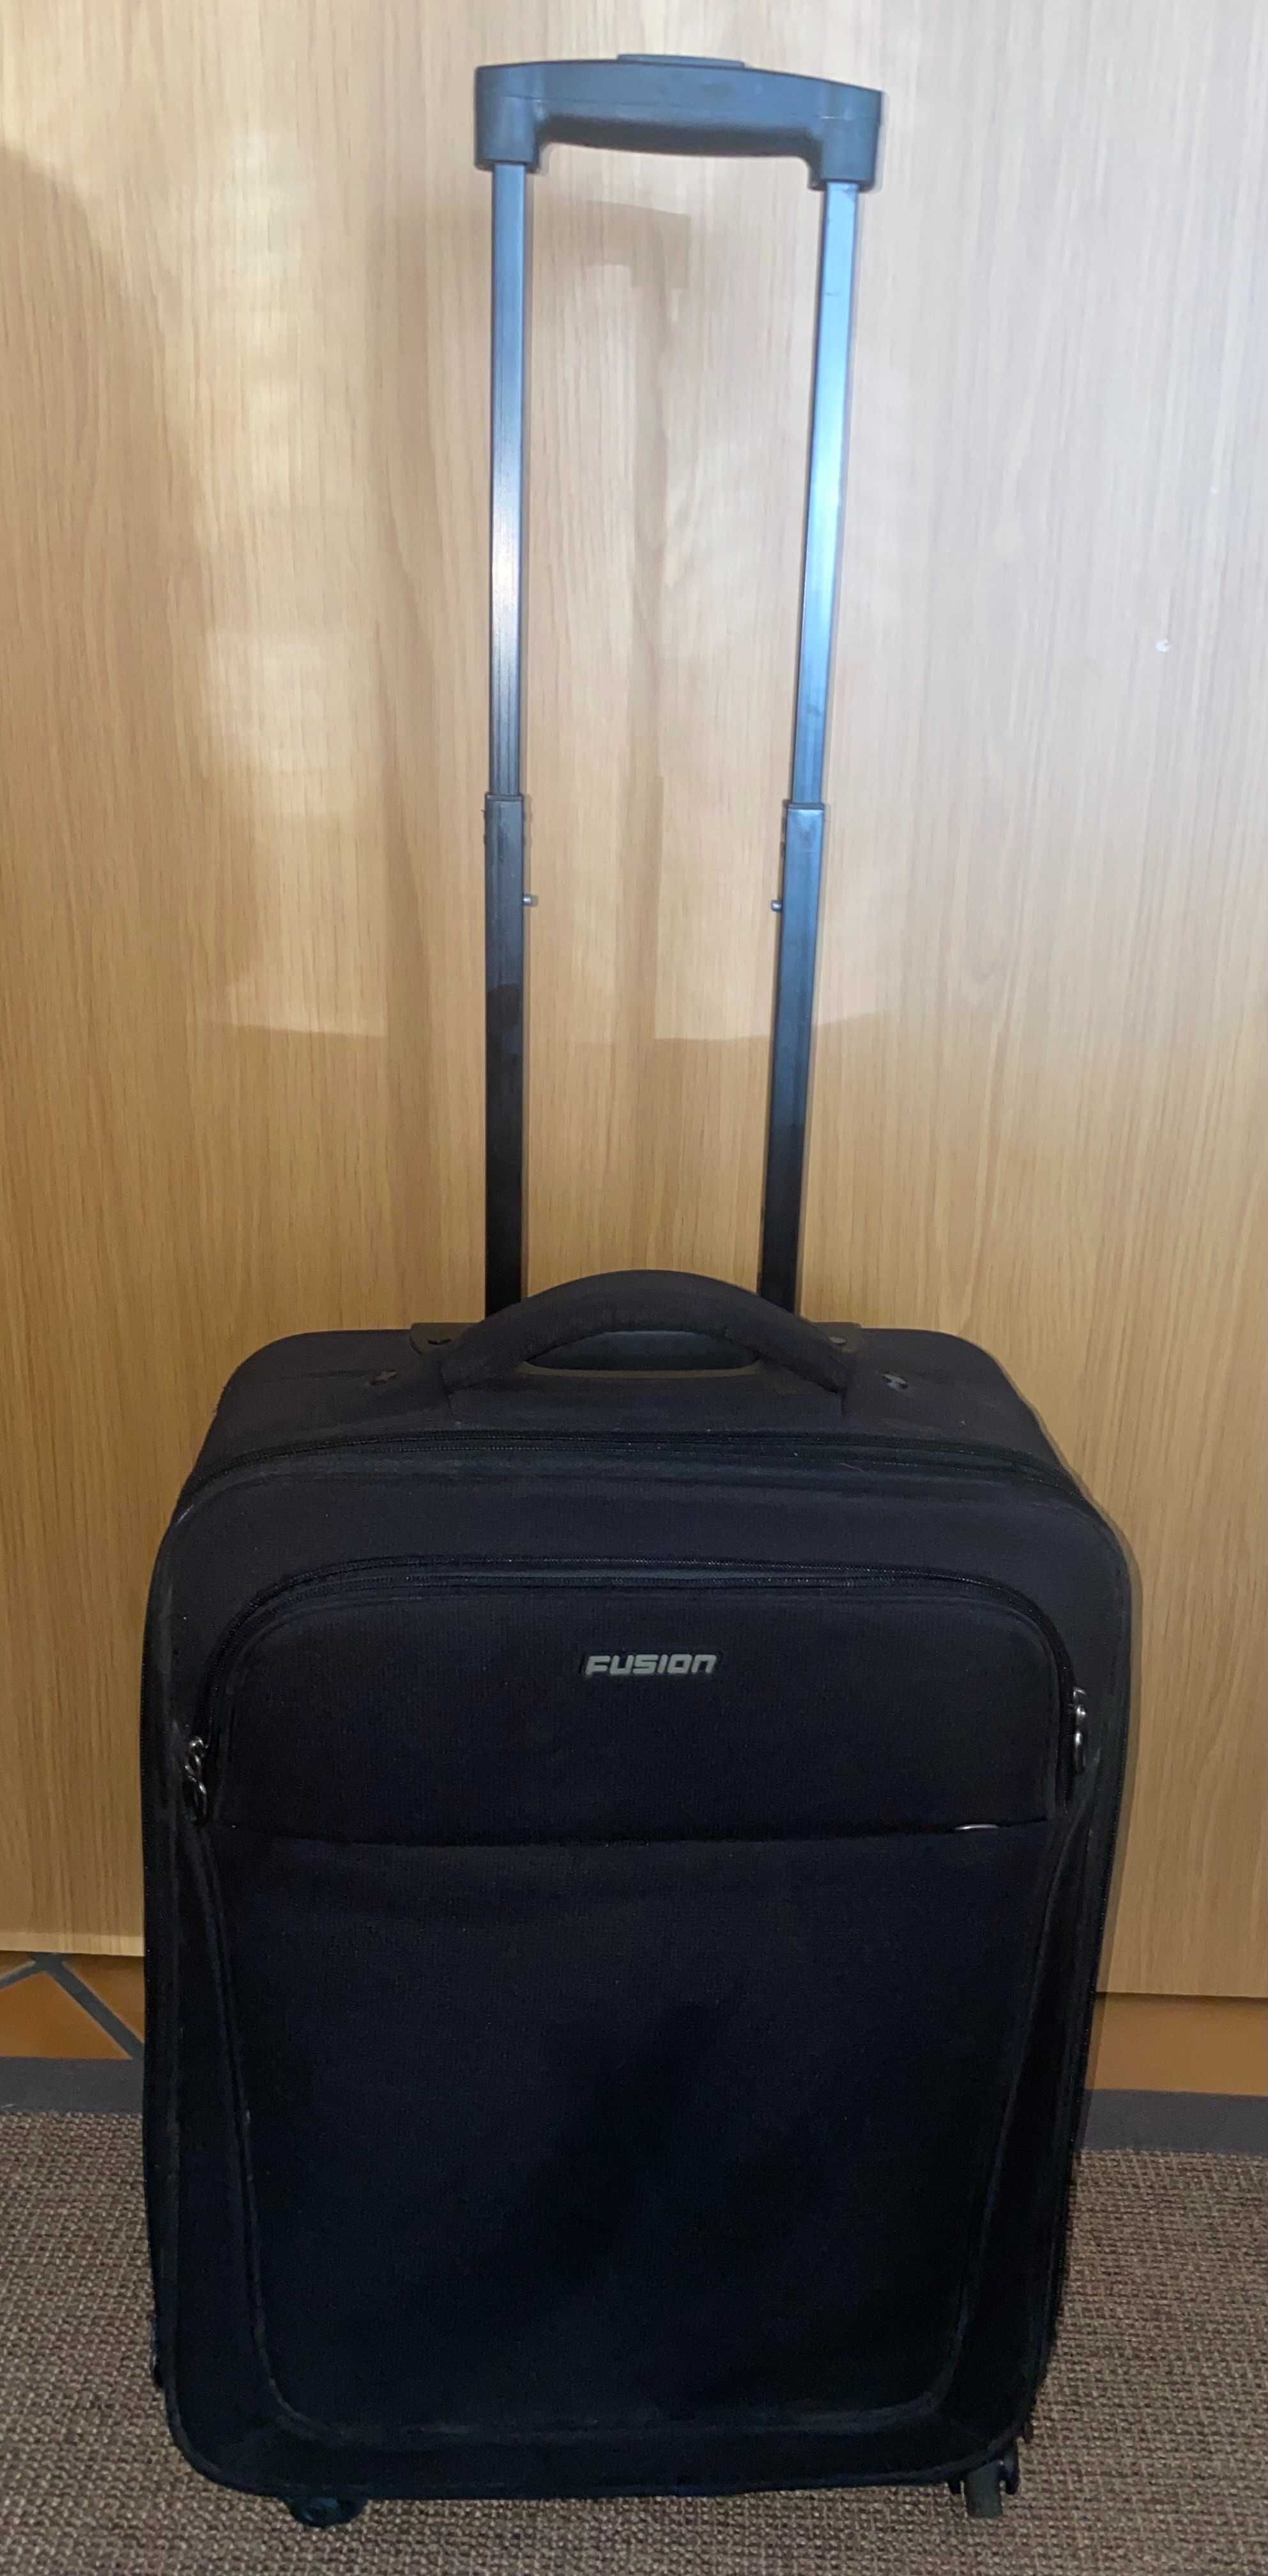 Black carry-on luggage bag